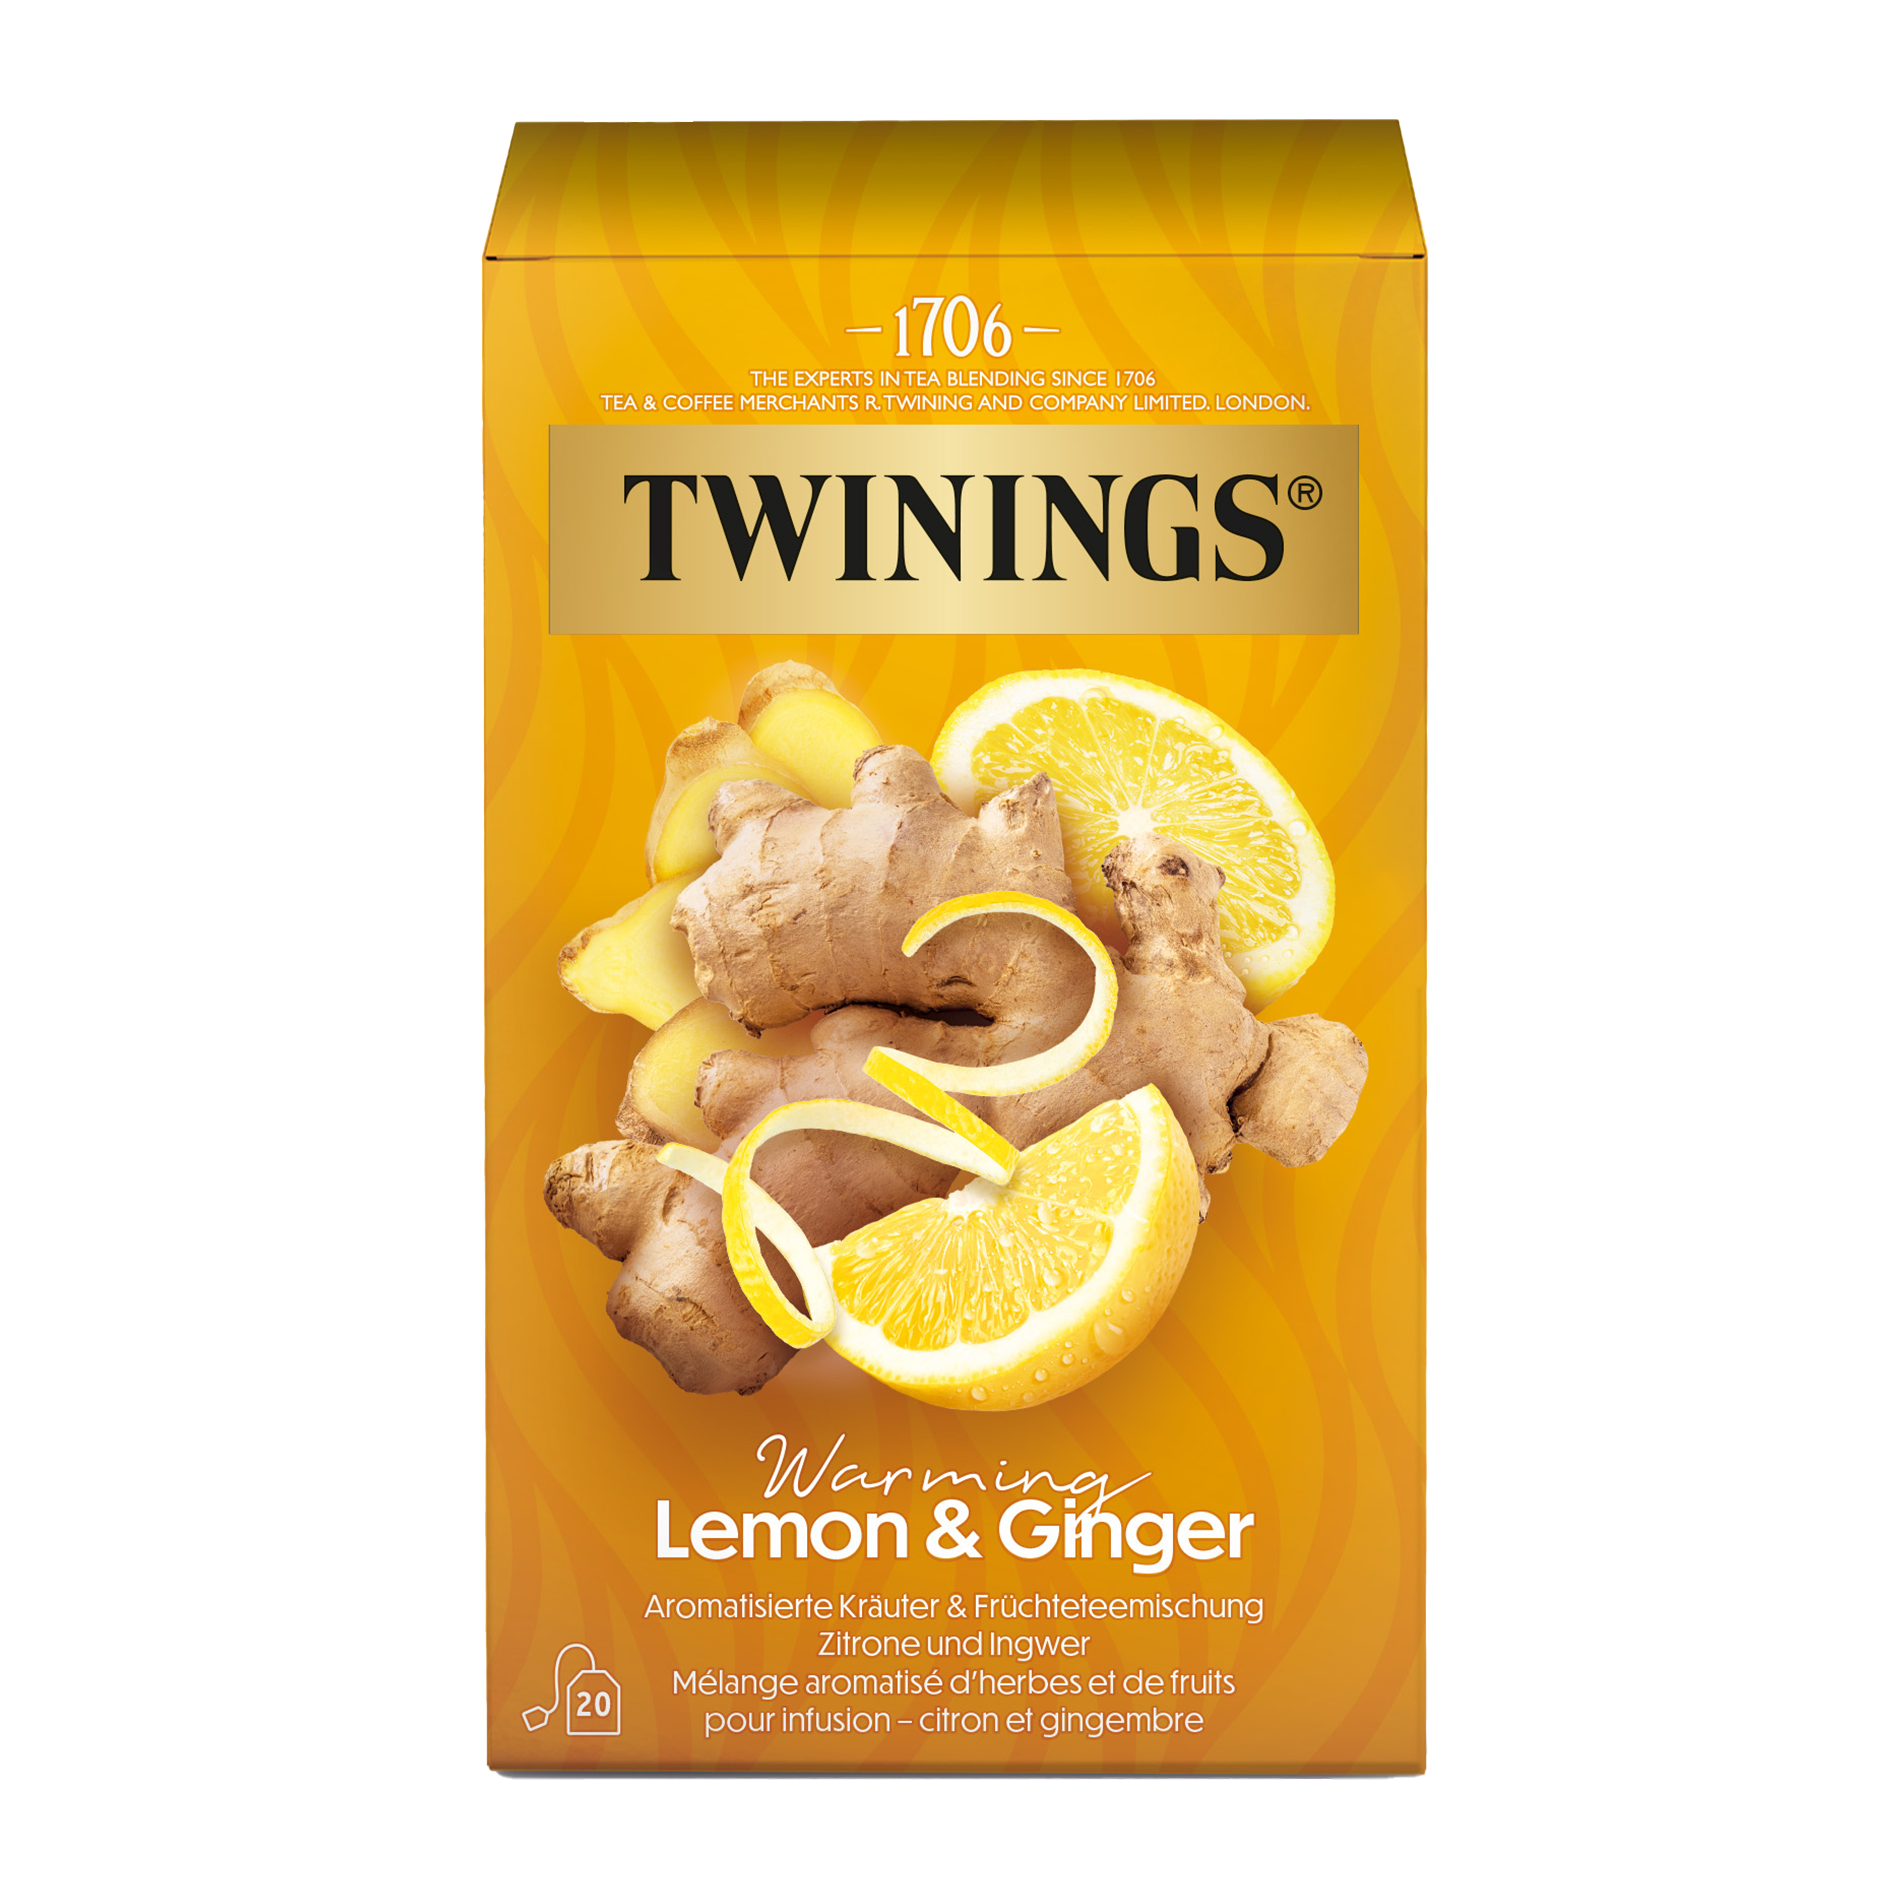  Lemon & Ginger: la tisane qui picote agréablement